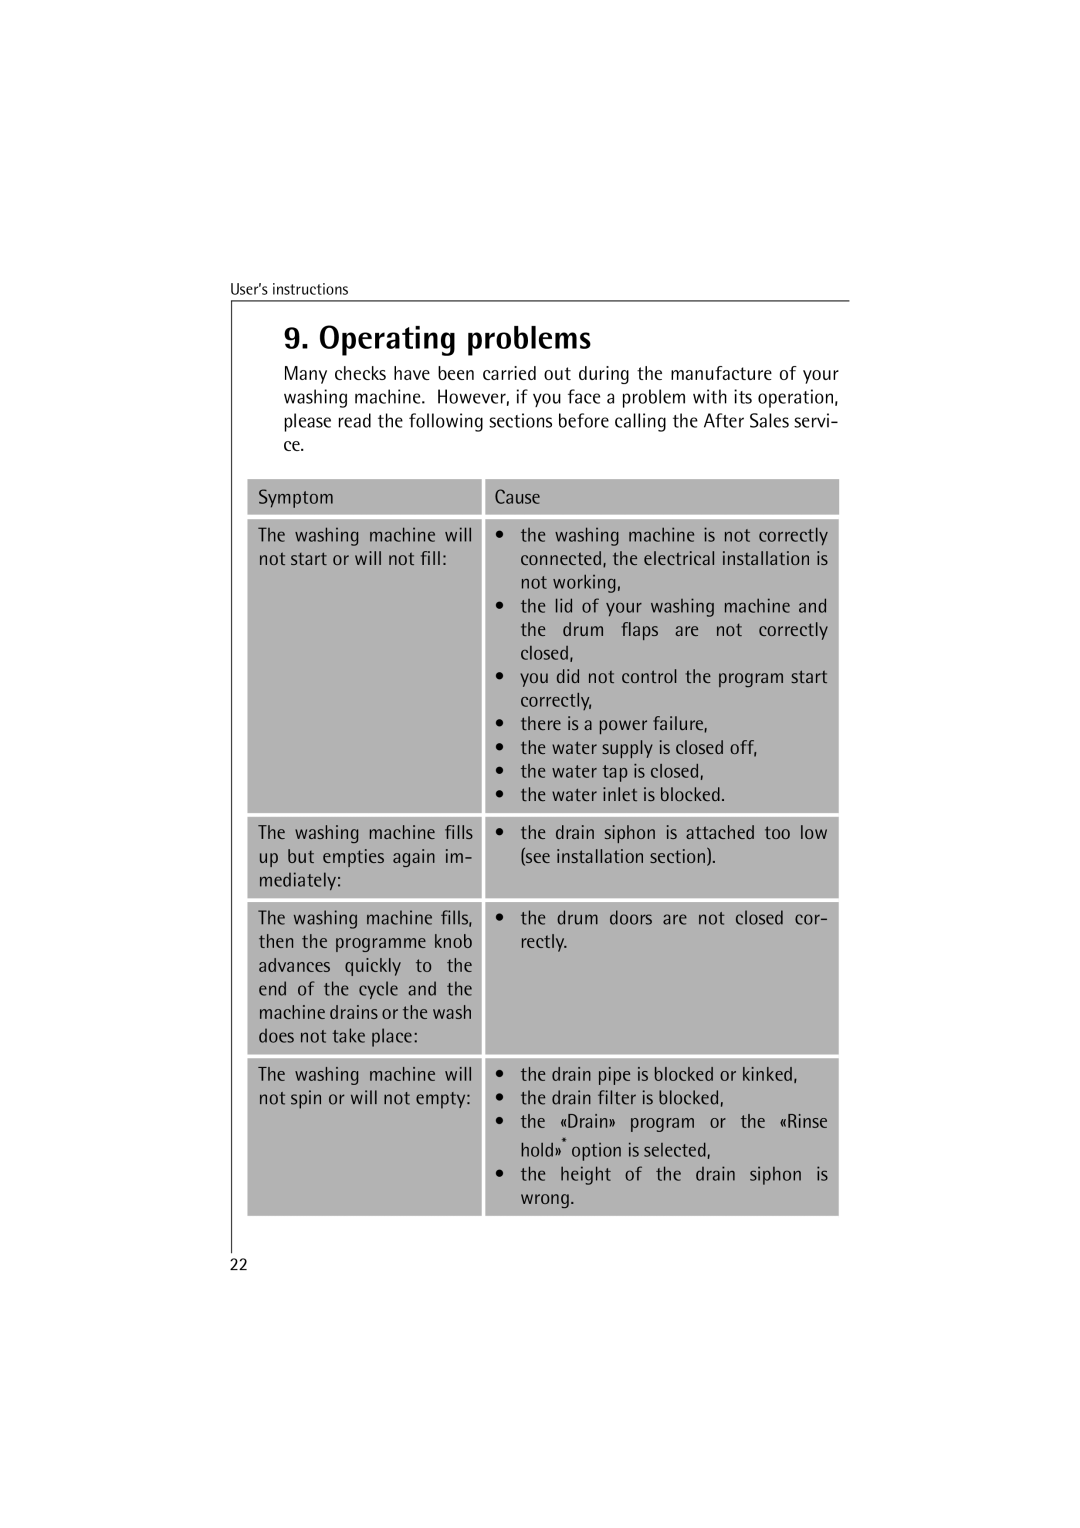 AEG 40850 manual Operating problems 